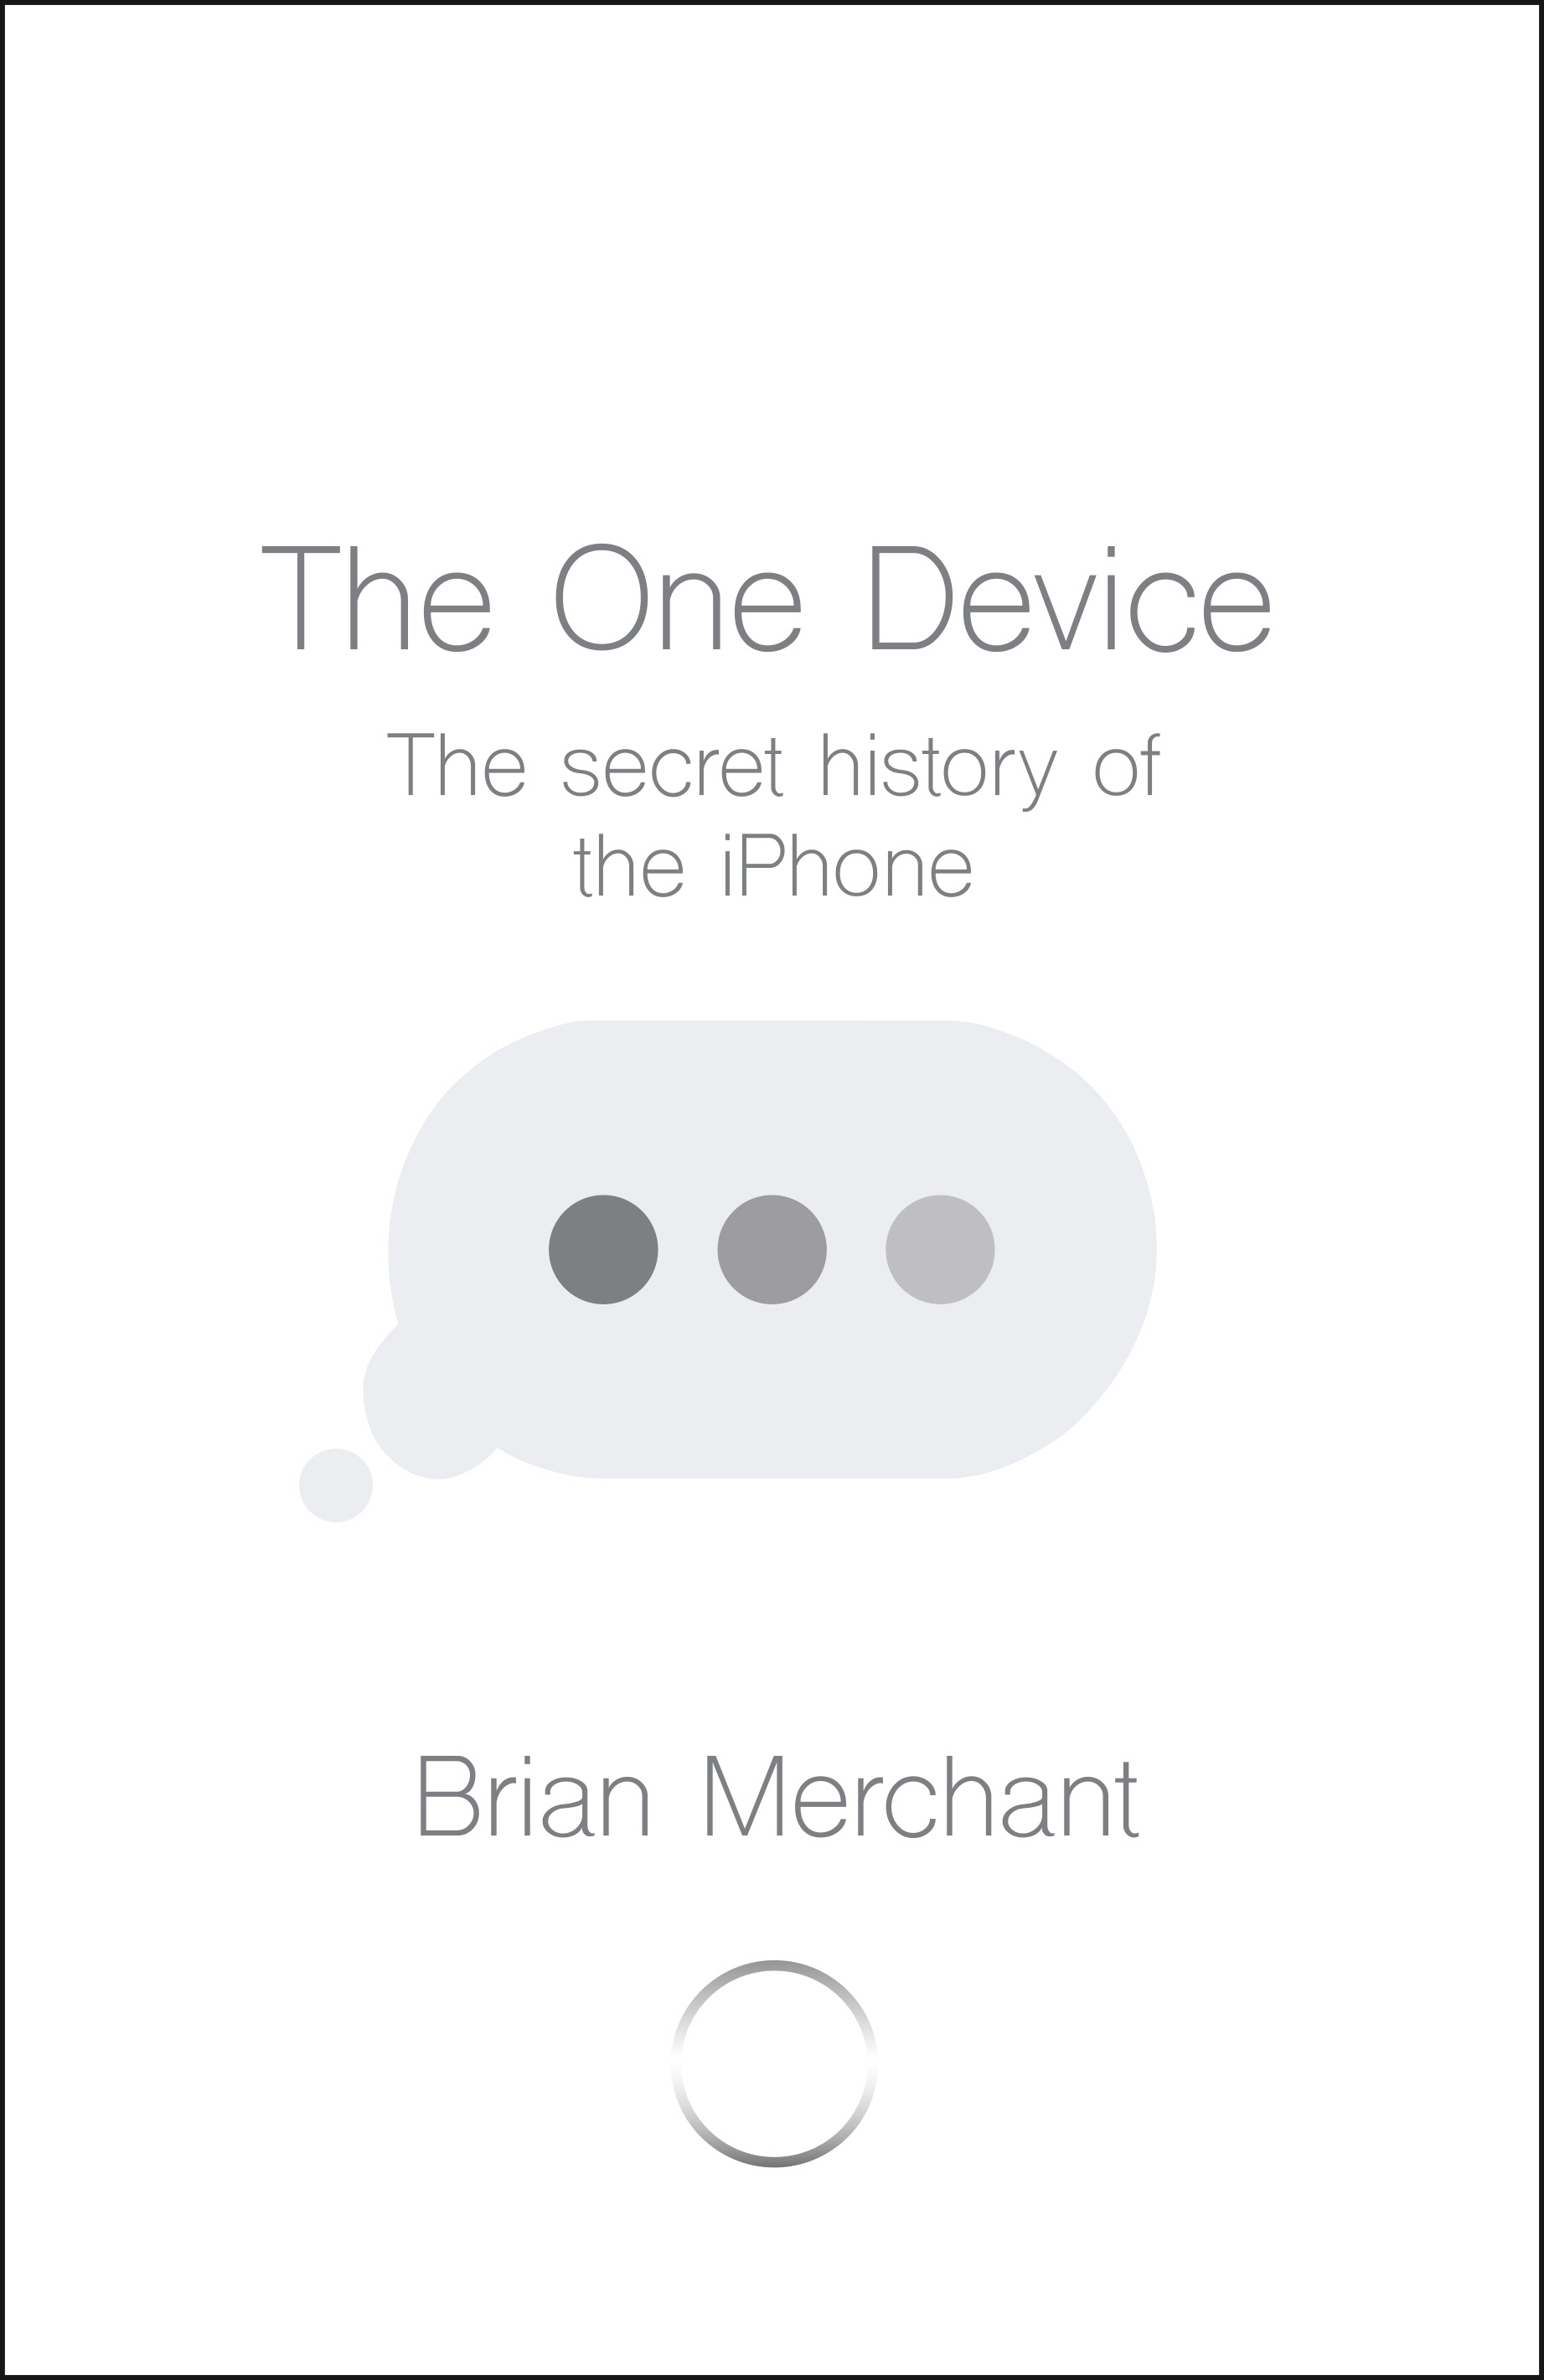 Device 01. The one device. Merchant b. "the one device". Брайан Мерчант. Bryan Merchant the one device.